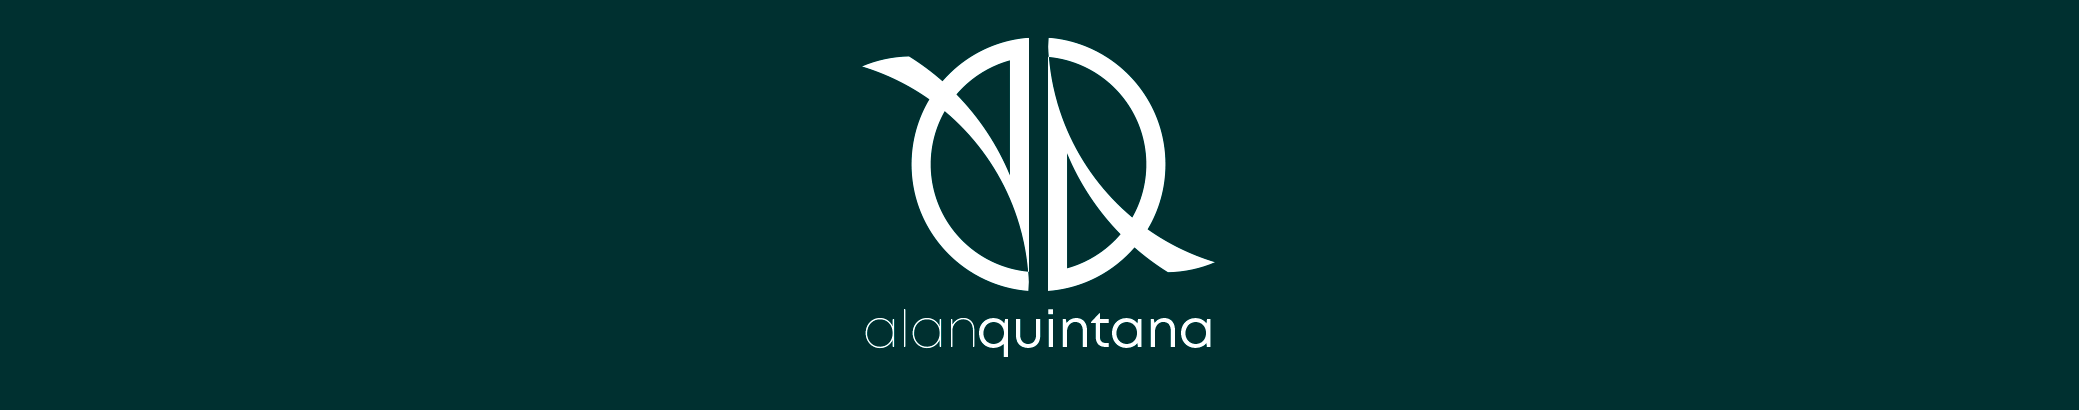 Alan Quintanas profilbanner